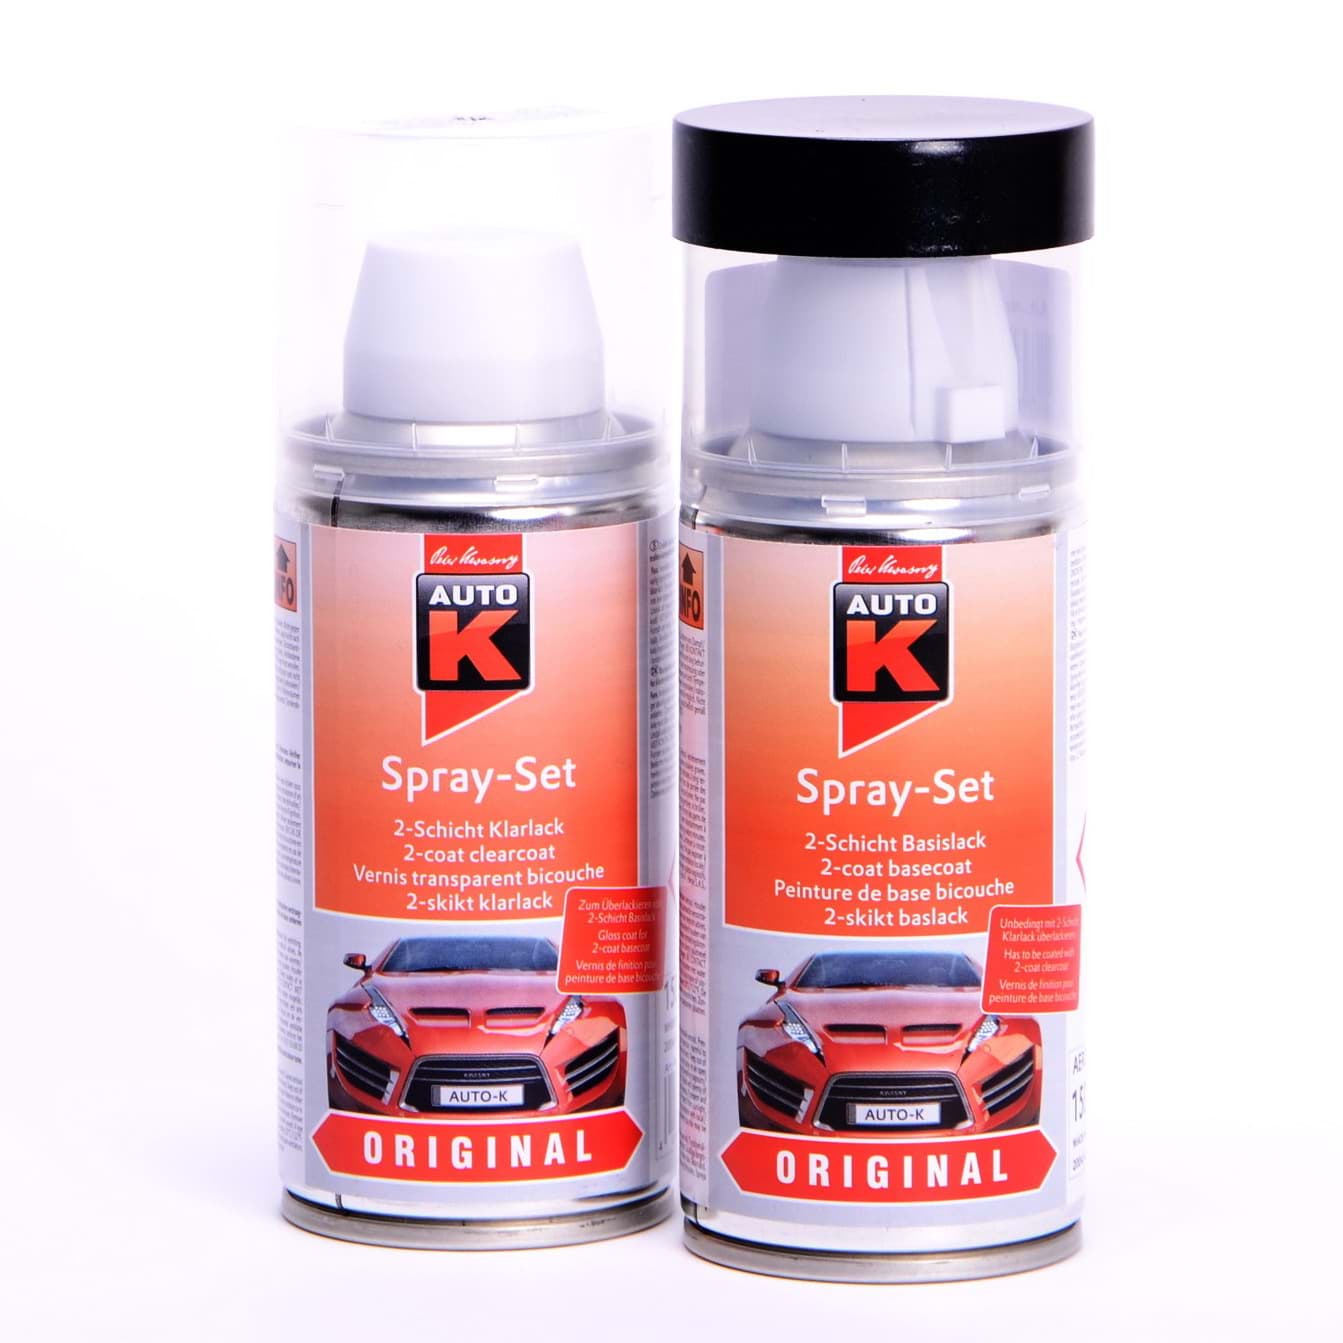 Изображение Auto-K Spray-Set Autolack für Opel 272 Miamiblau 21365 